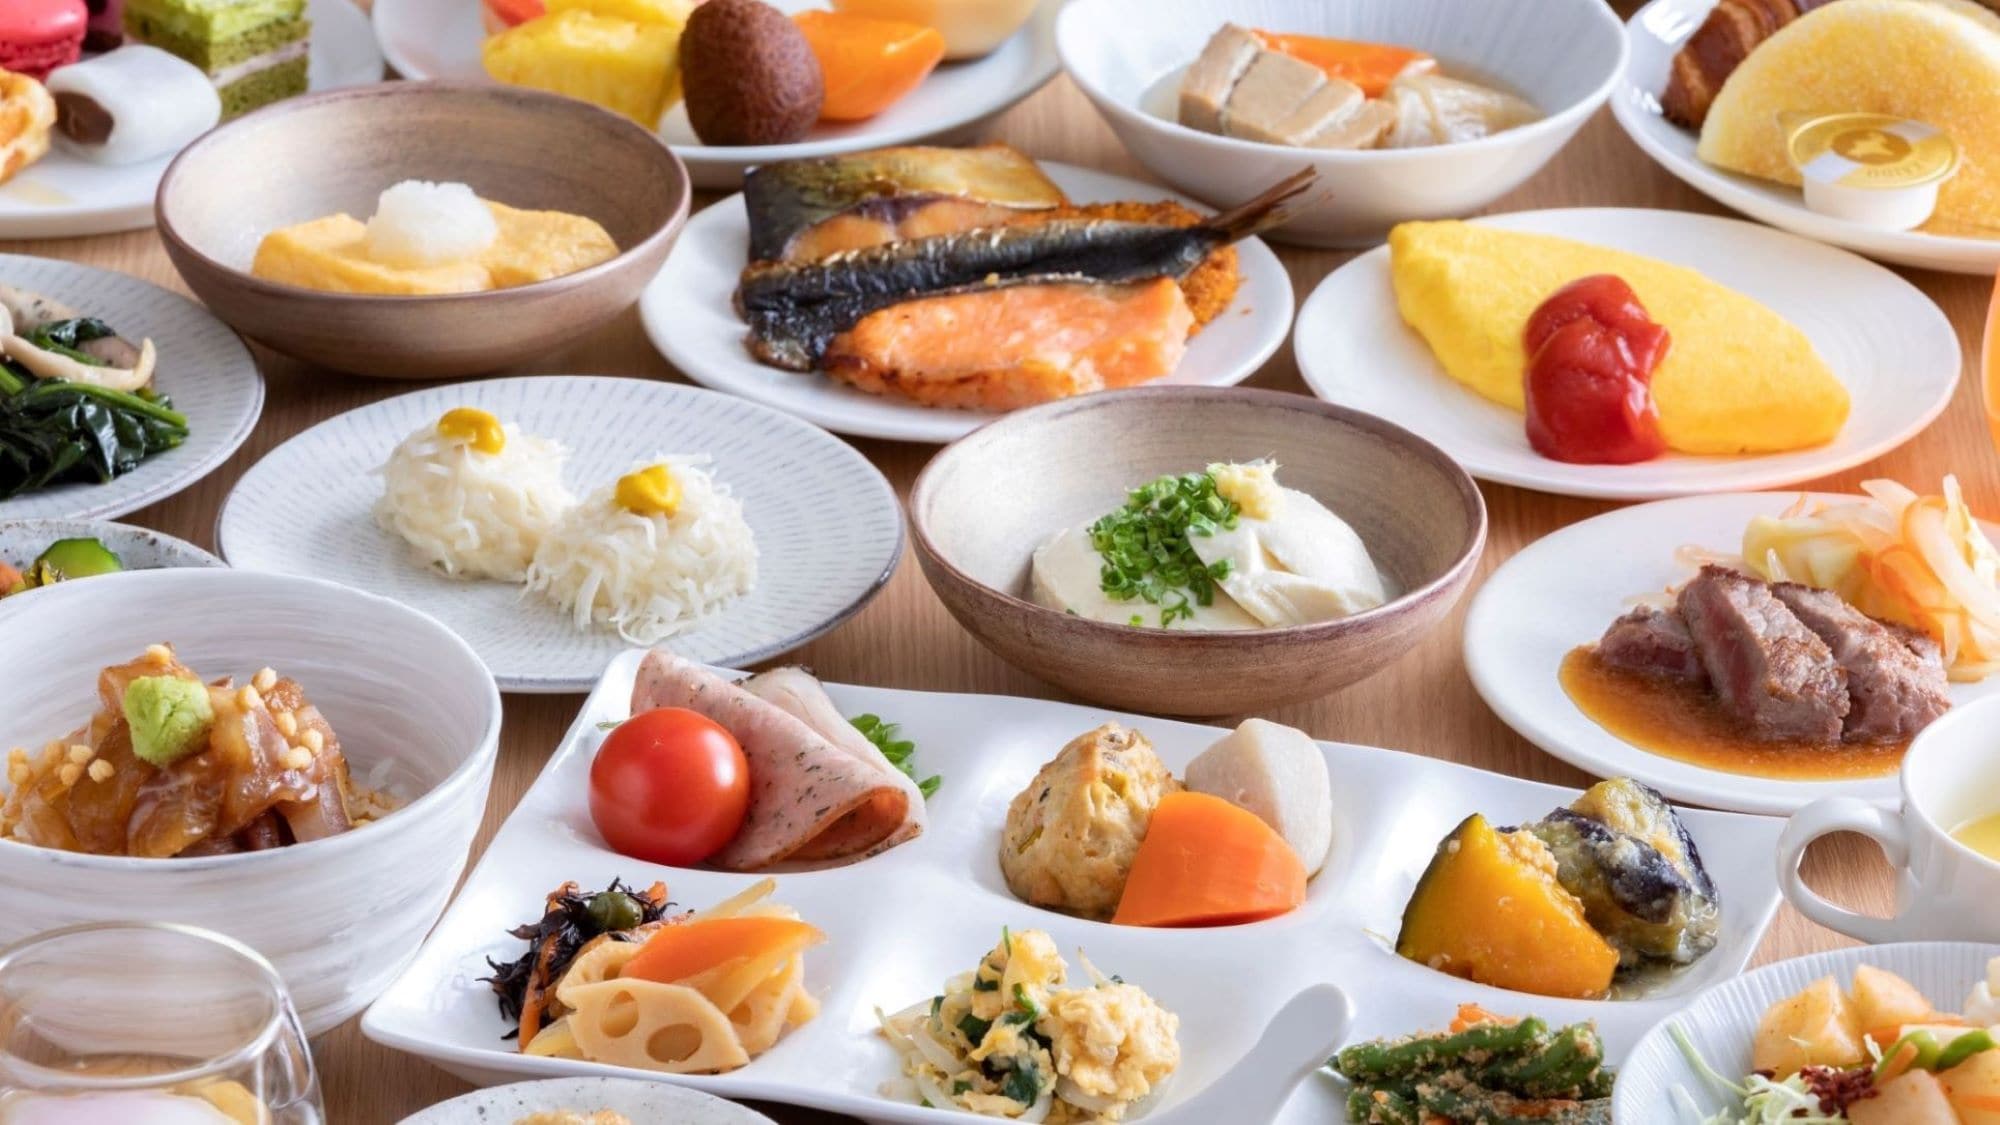 Higashikan Gepparo Breakfast Buffet Breakfast Festival (R) 2018/2019 Ranked No. 1 in Saga Prefecture for 2 consecutive years